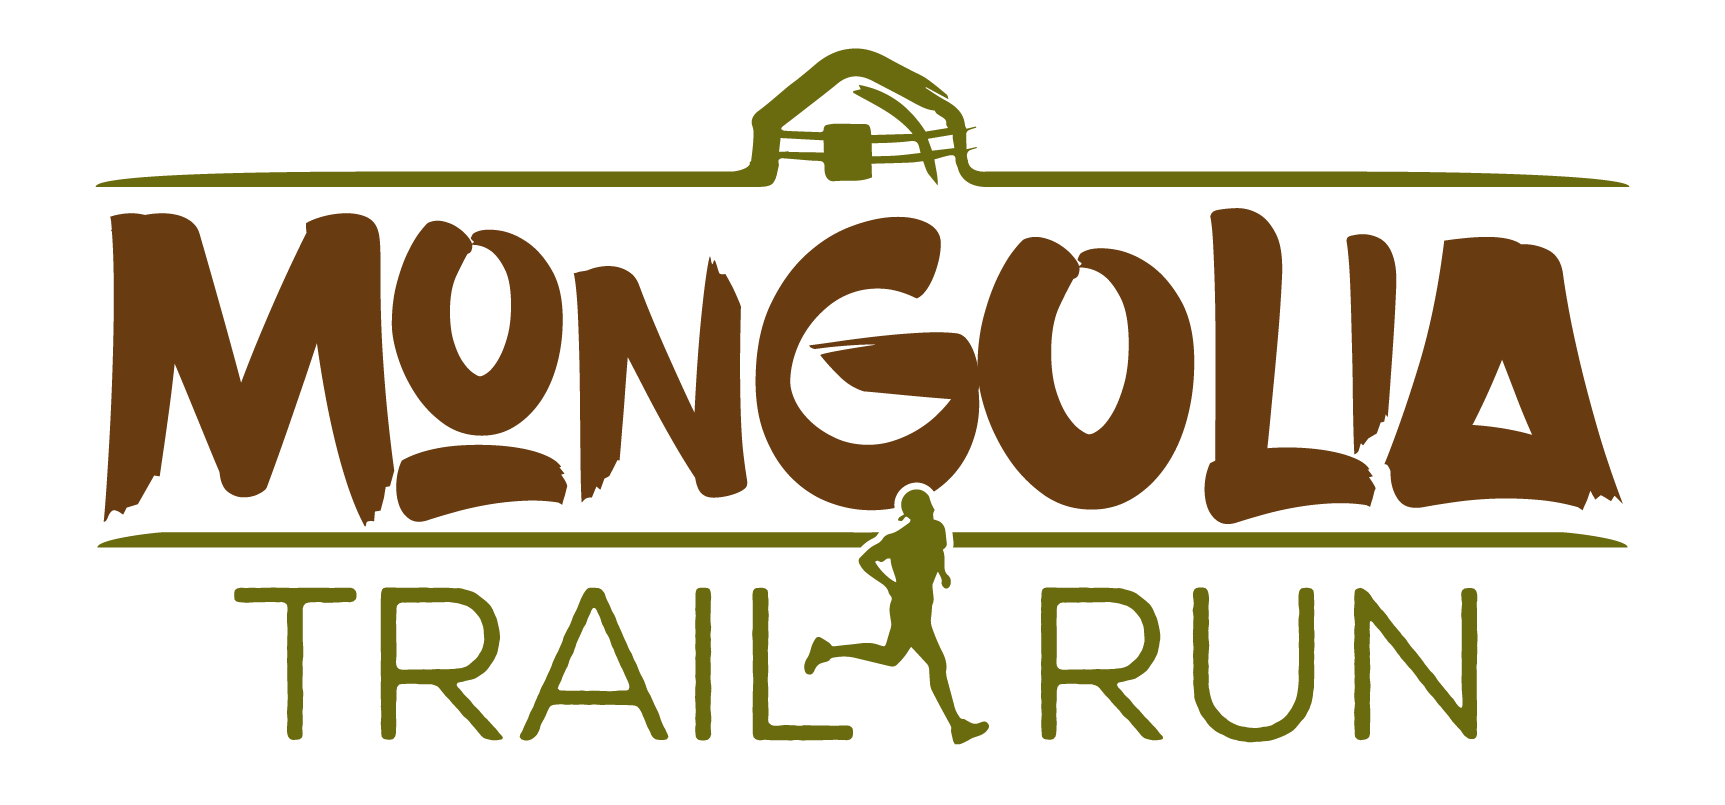 mongolia trail run logo